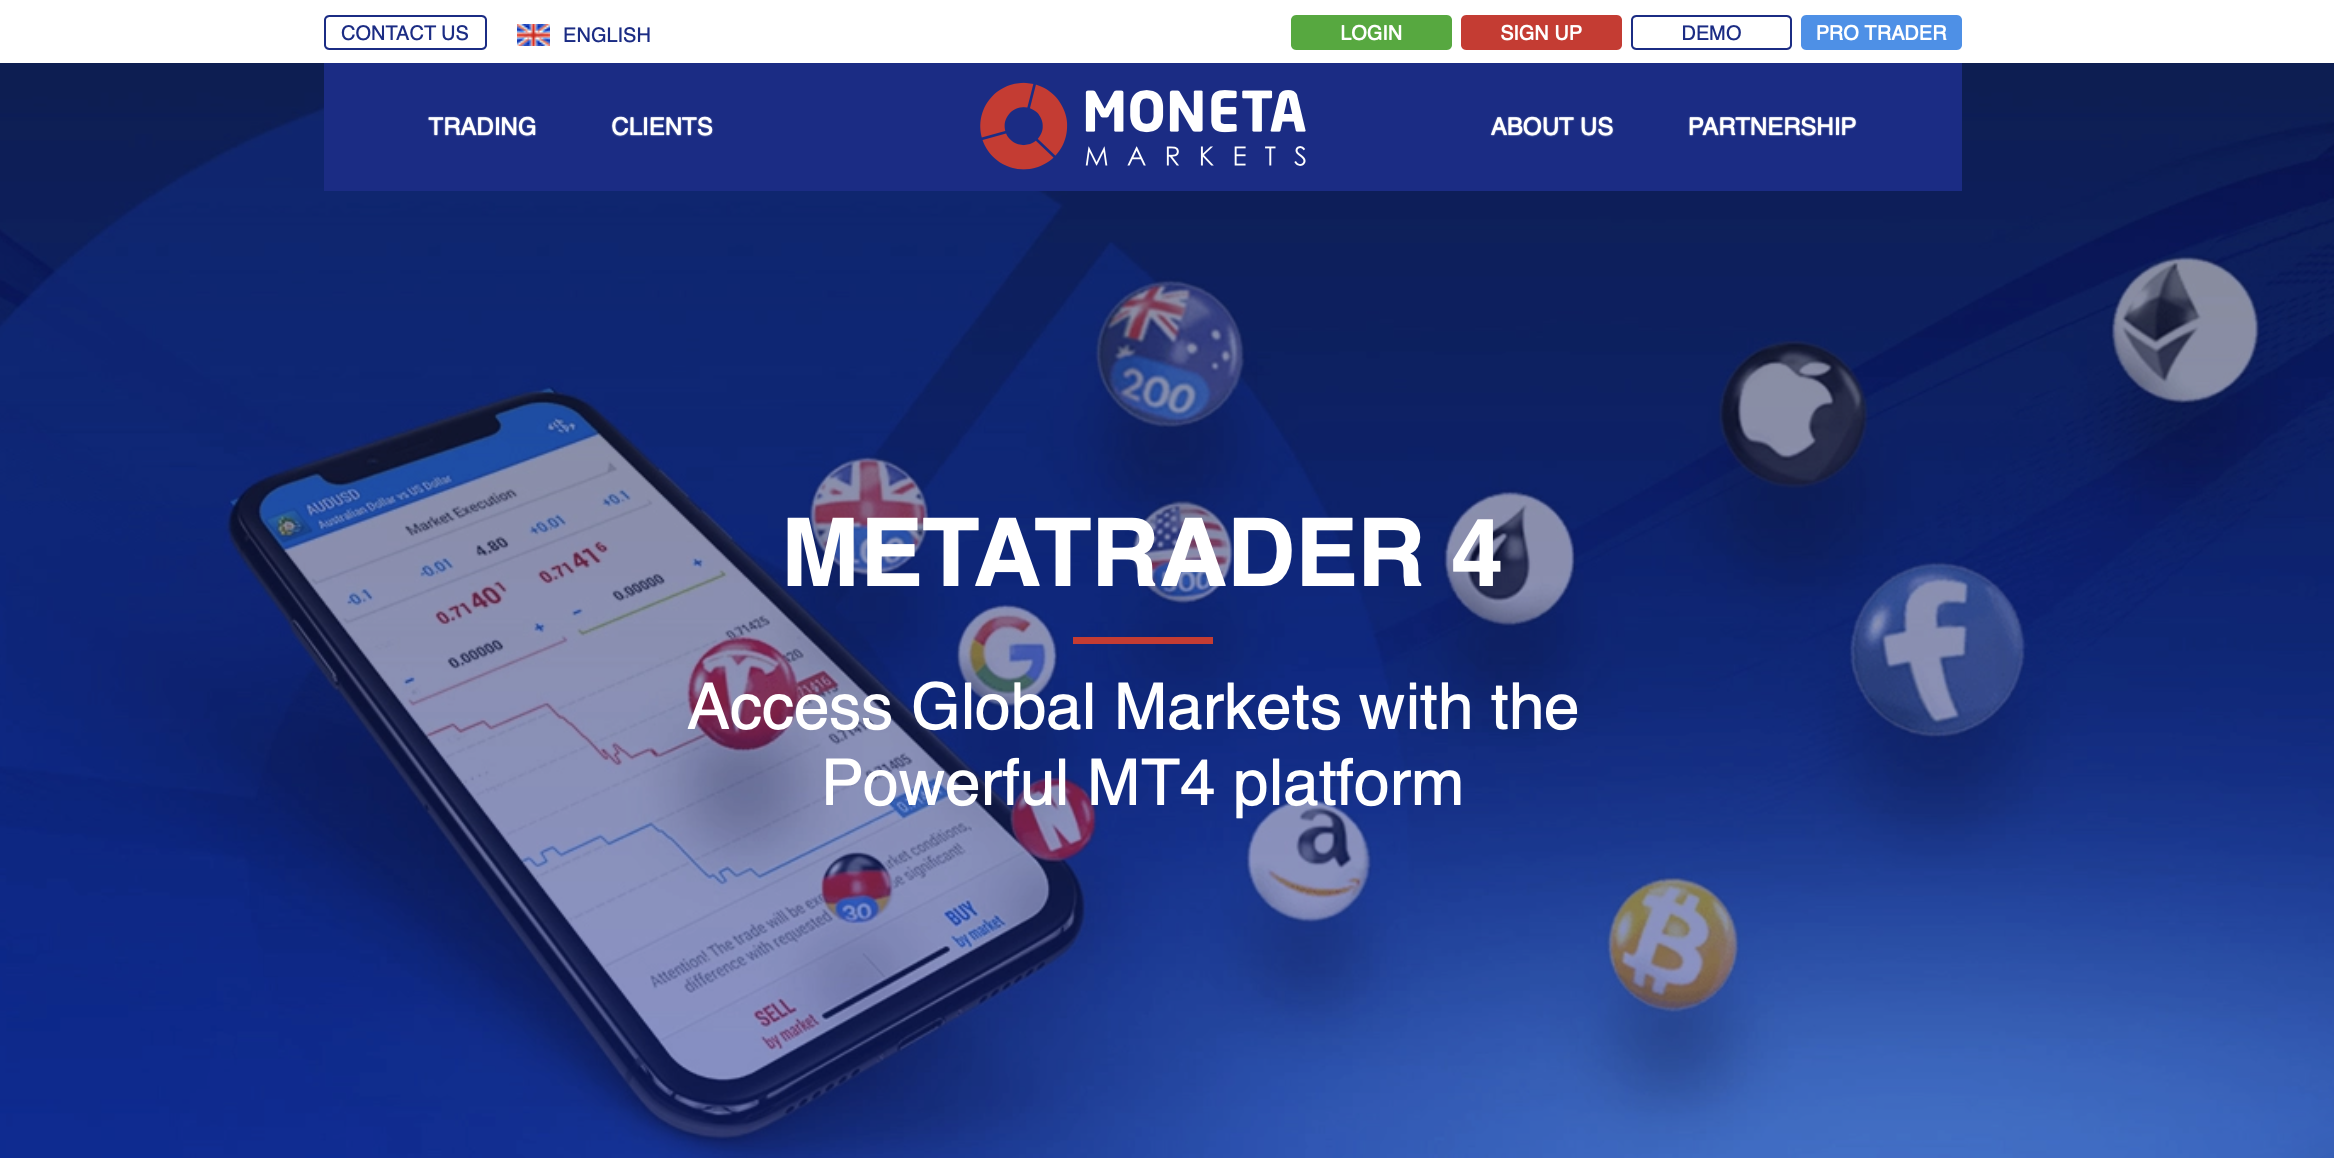 De officiële MetaTrader 4 landingspagina van Moneta Markets